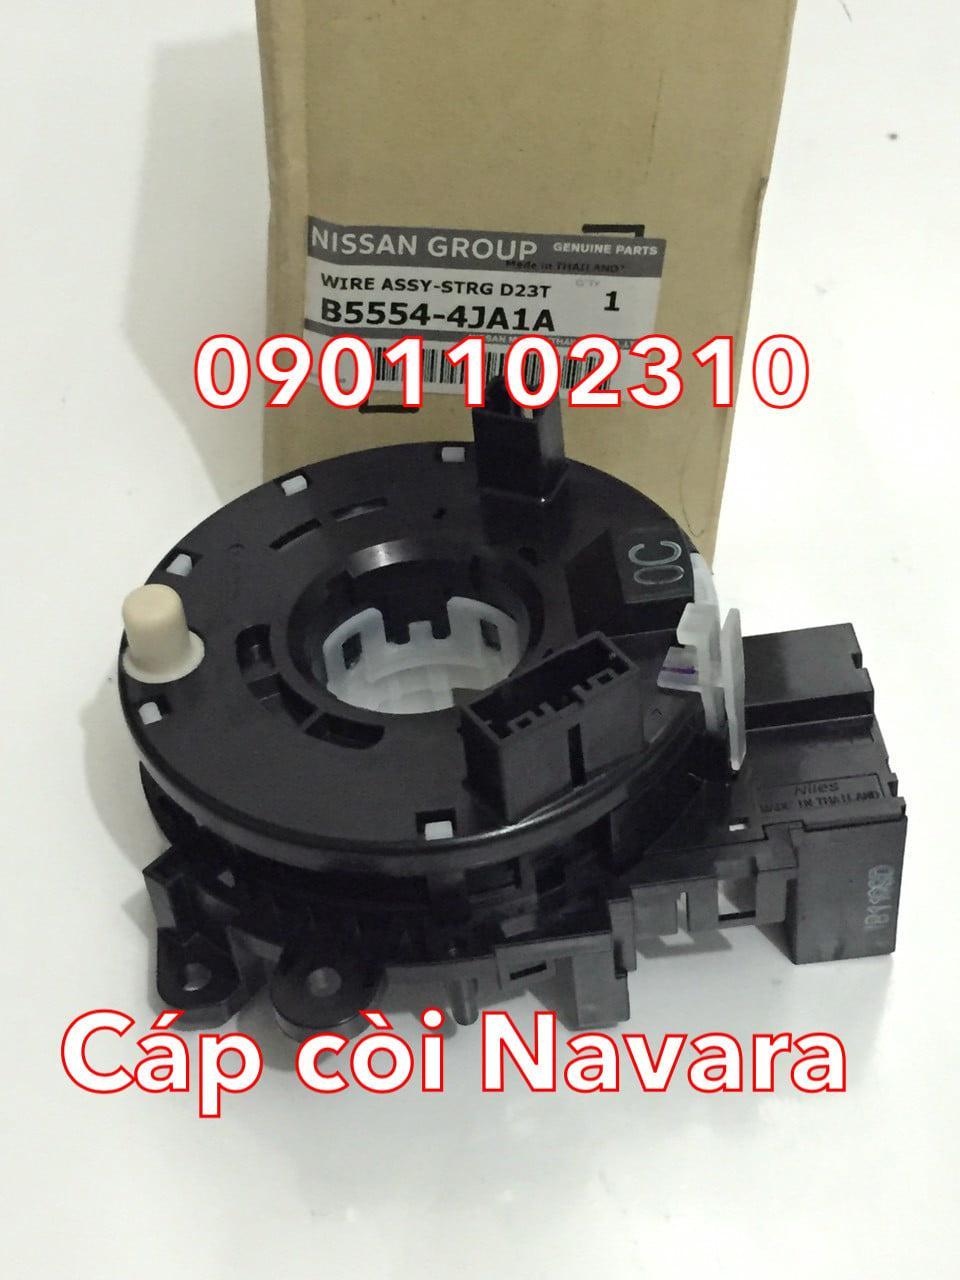 Cáp còi Nissan Navara B55544JA1A